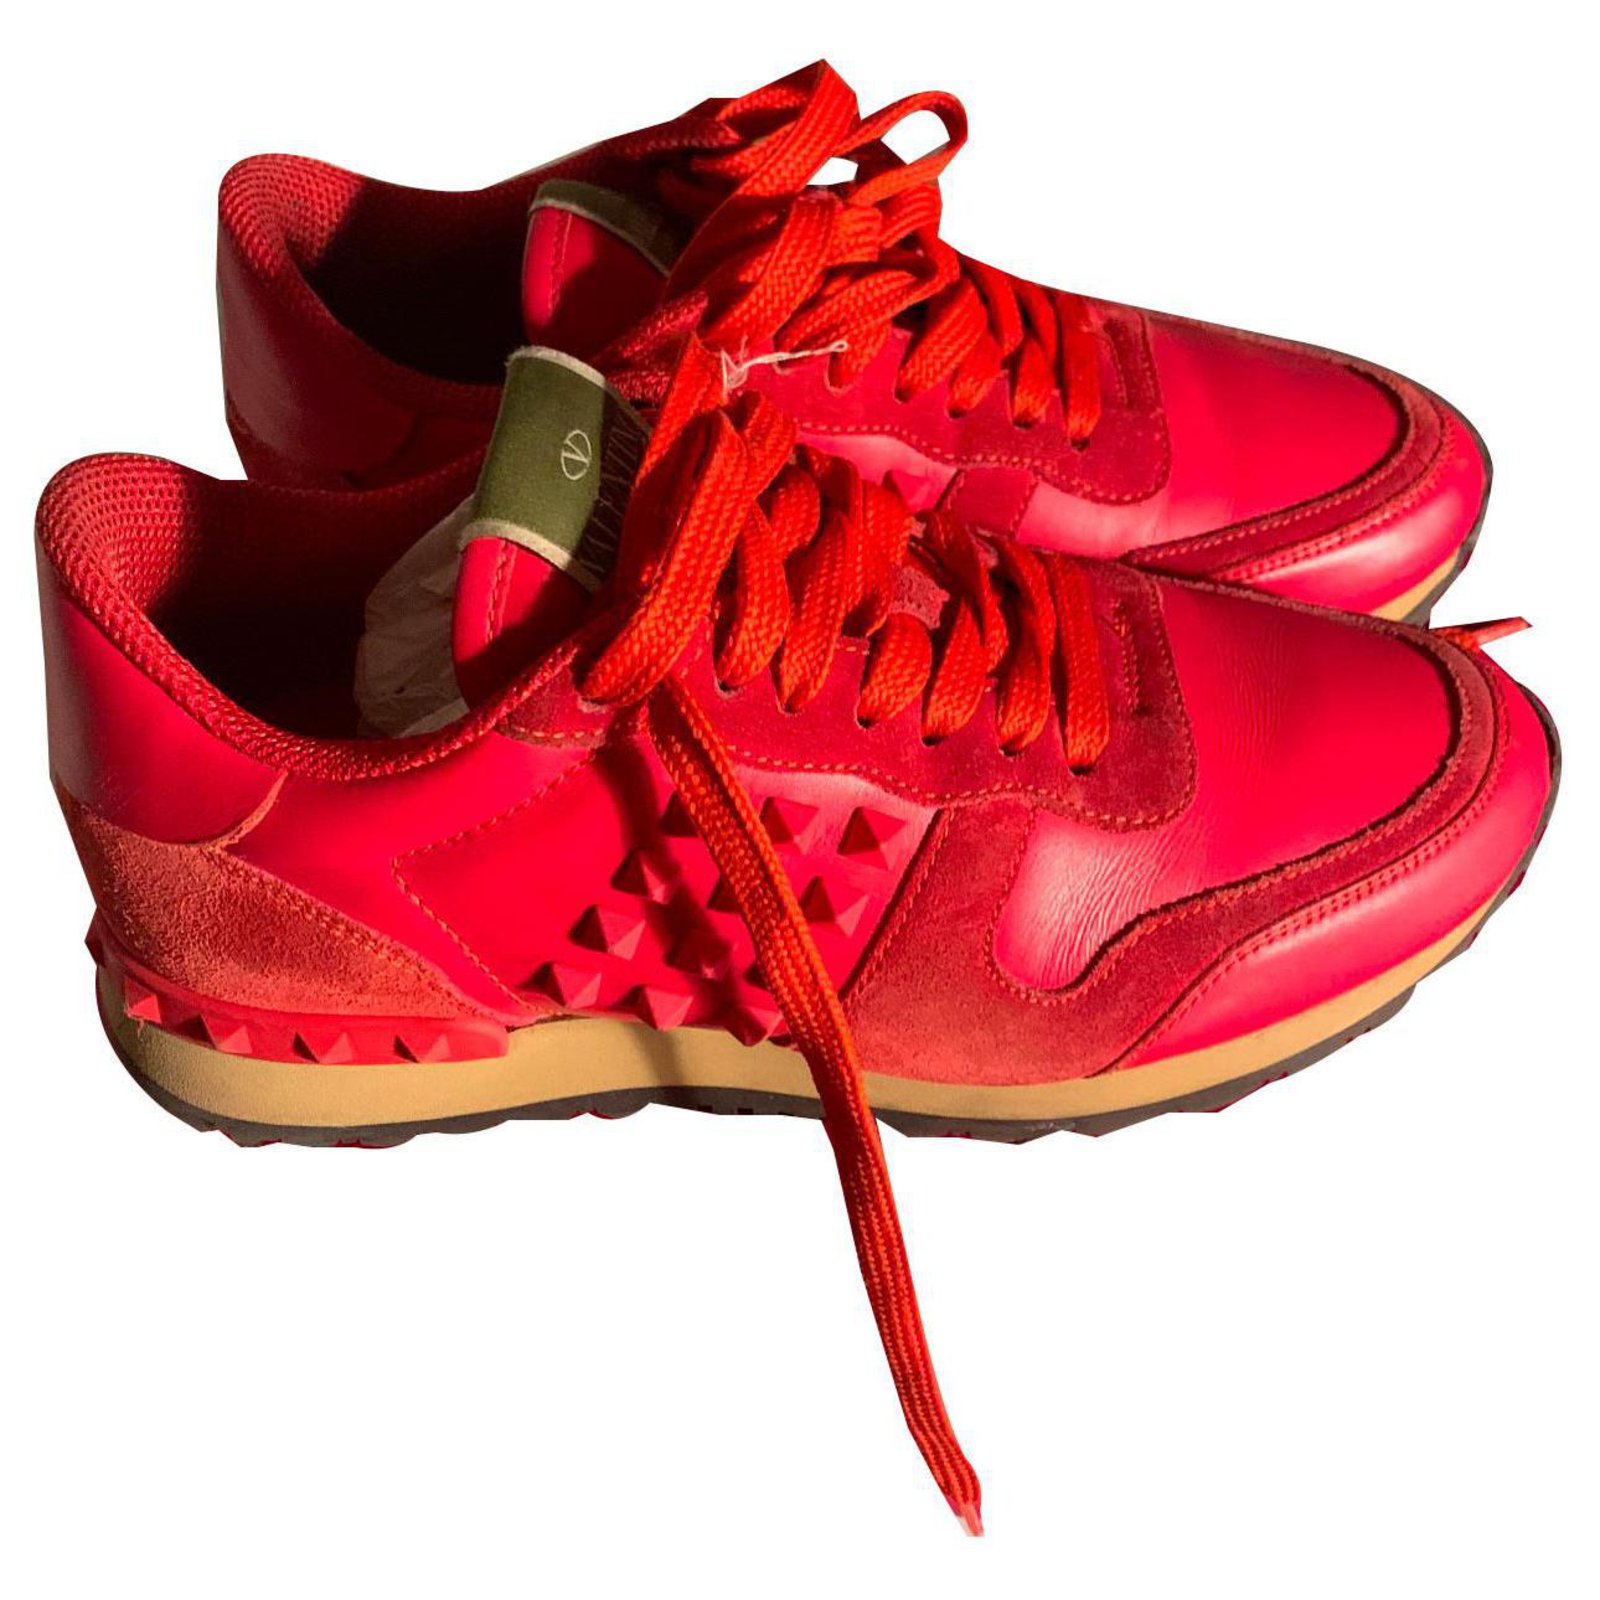 valentino garavani sneakers red